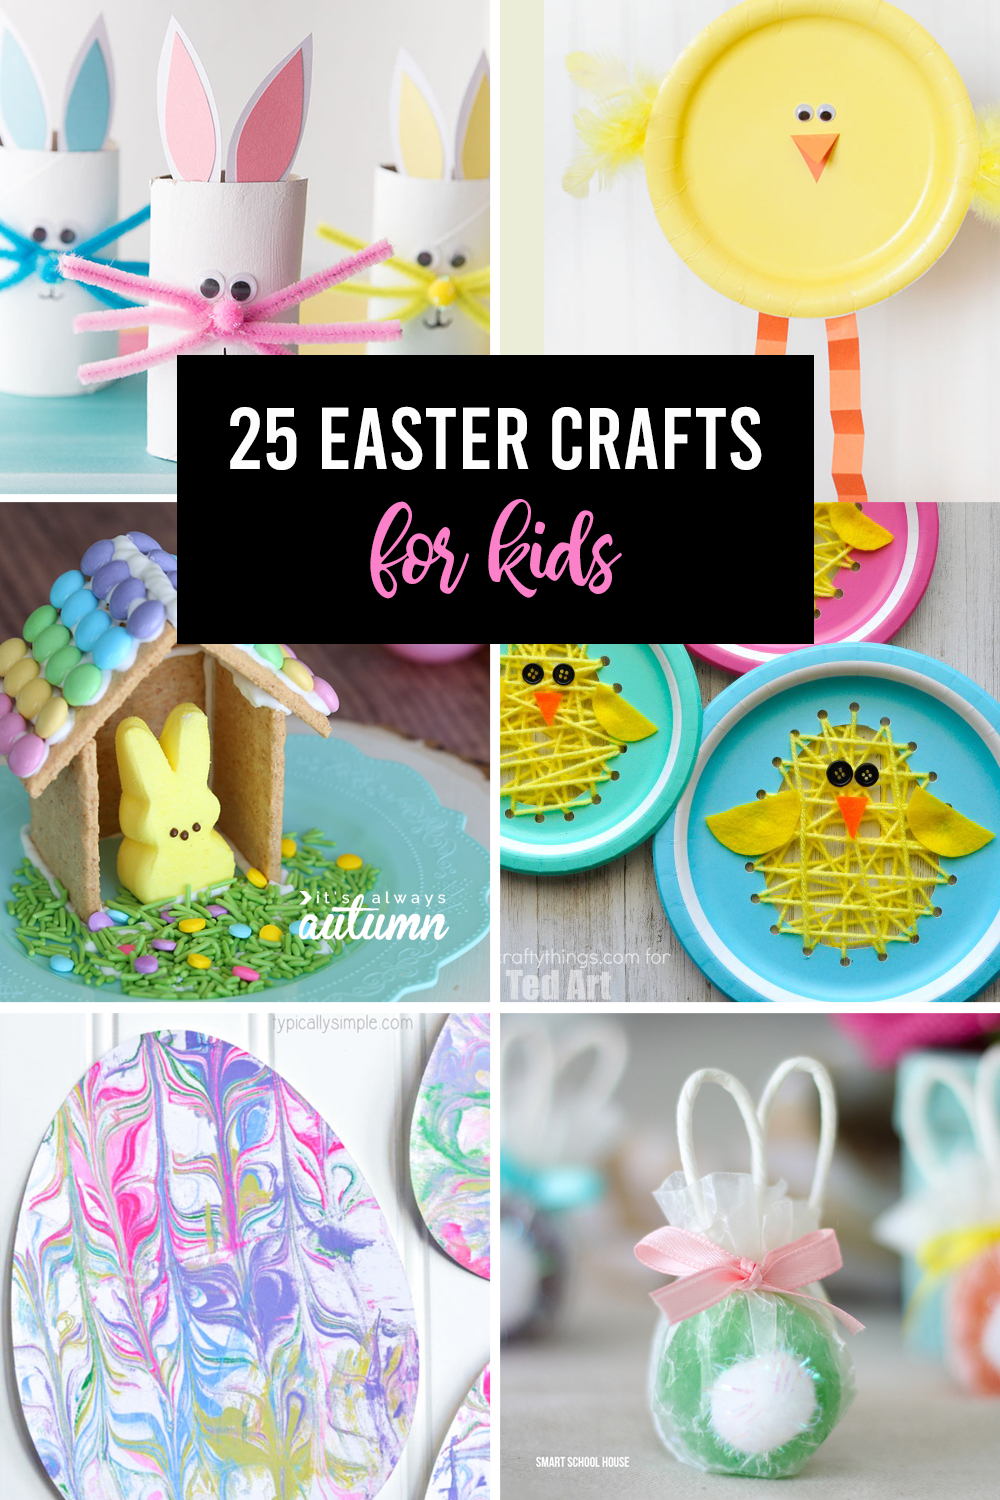 6 Easy Easter Crafts for Kids